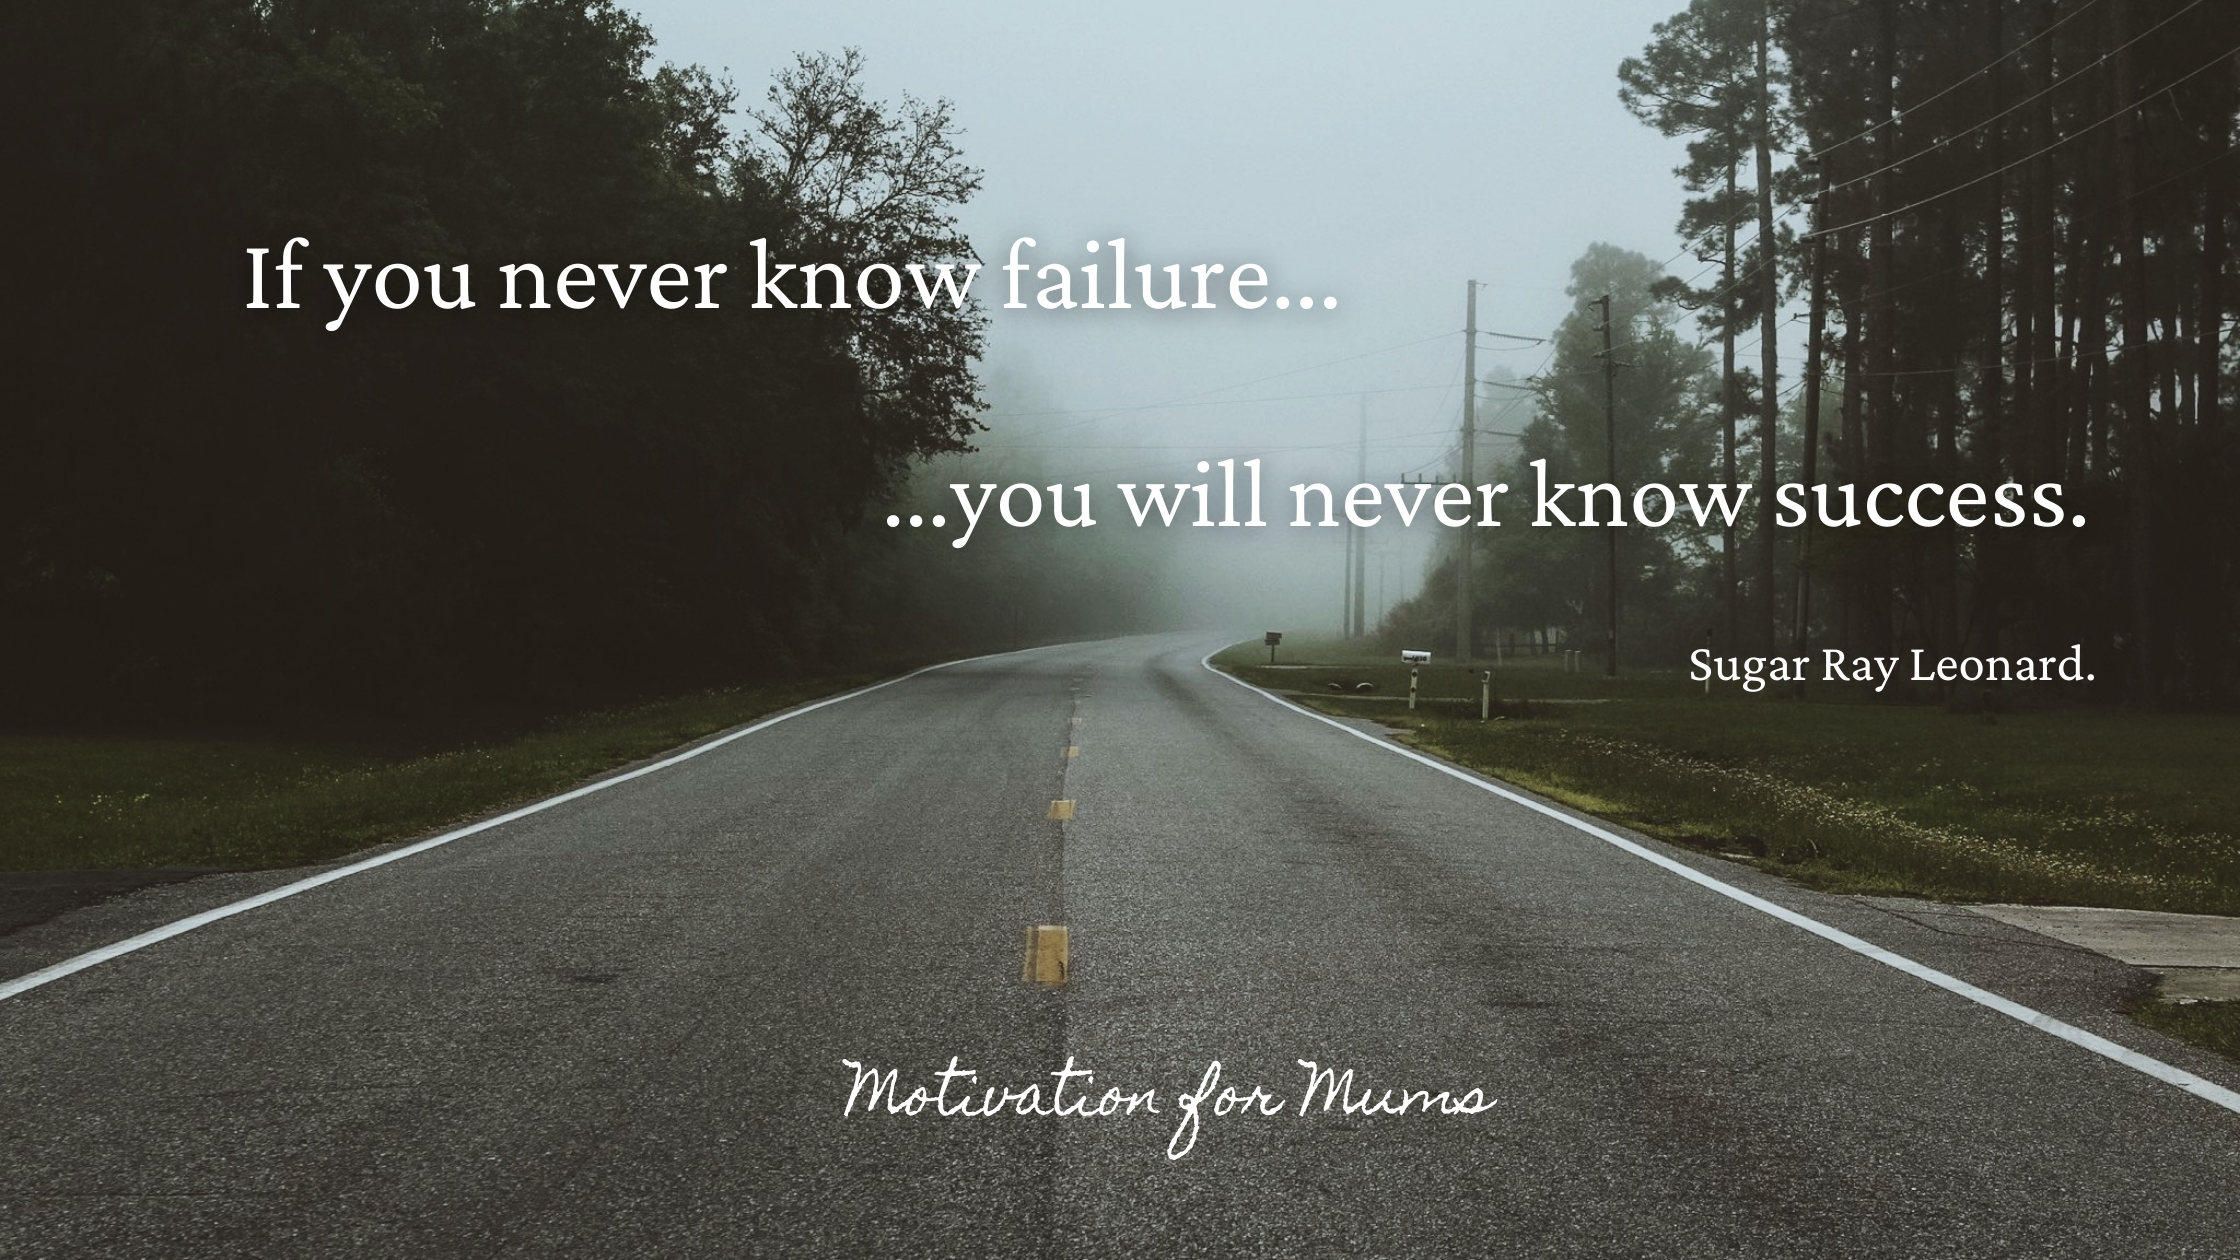 Failing Does Not Make You a Failure.